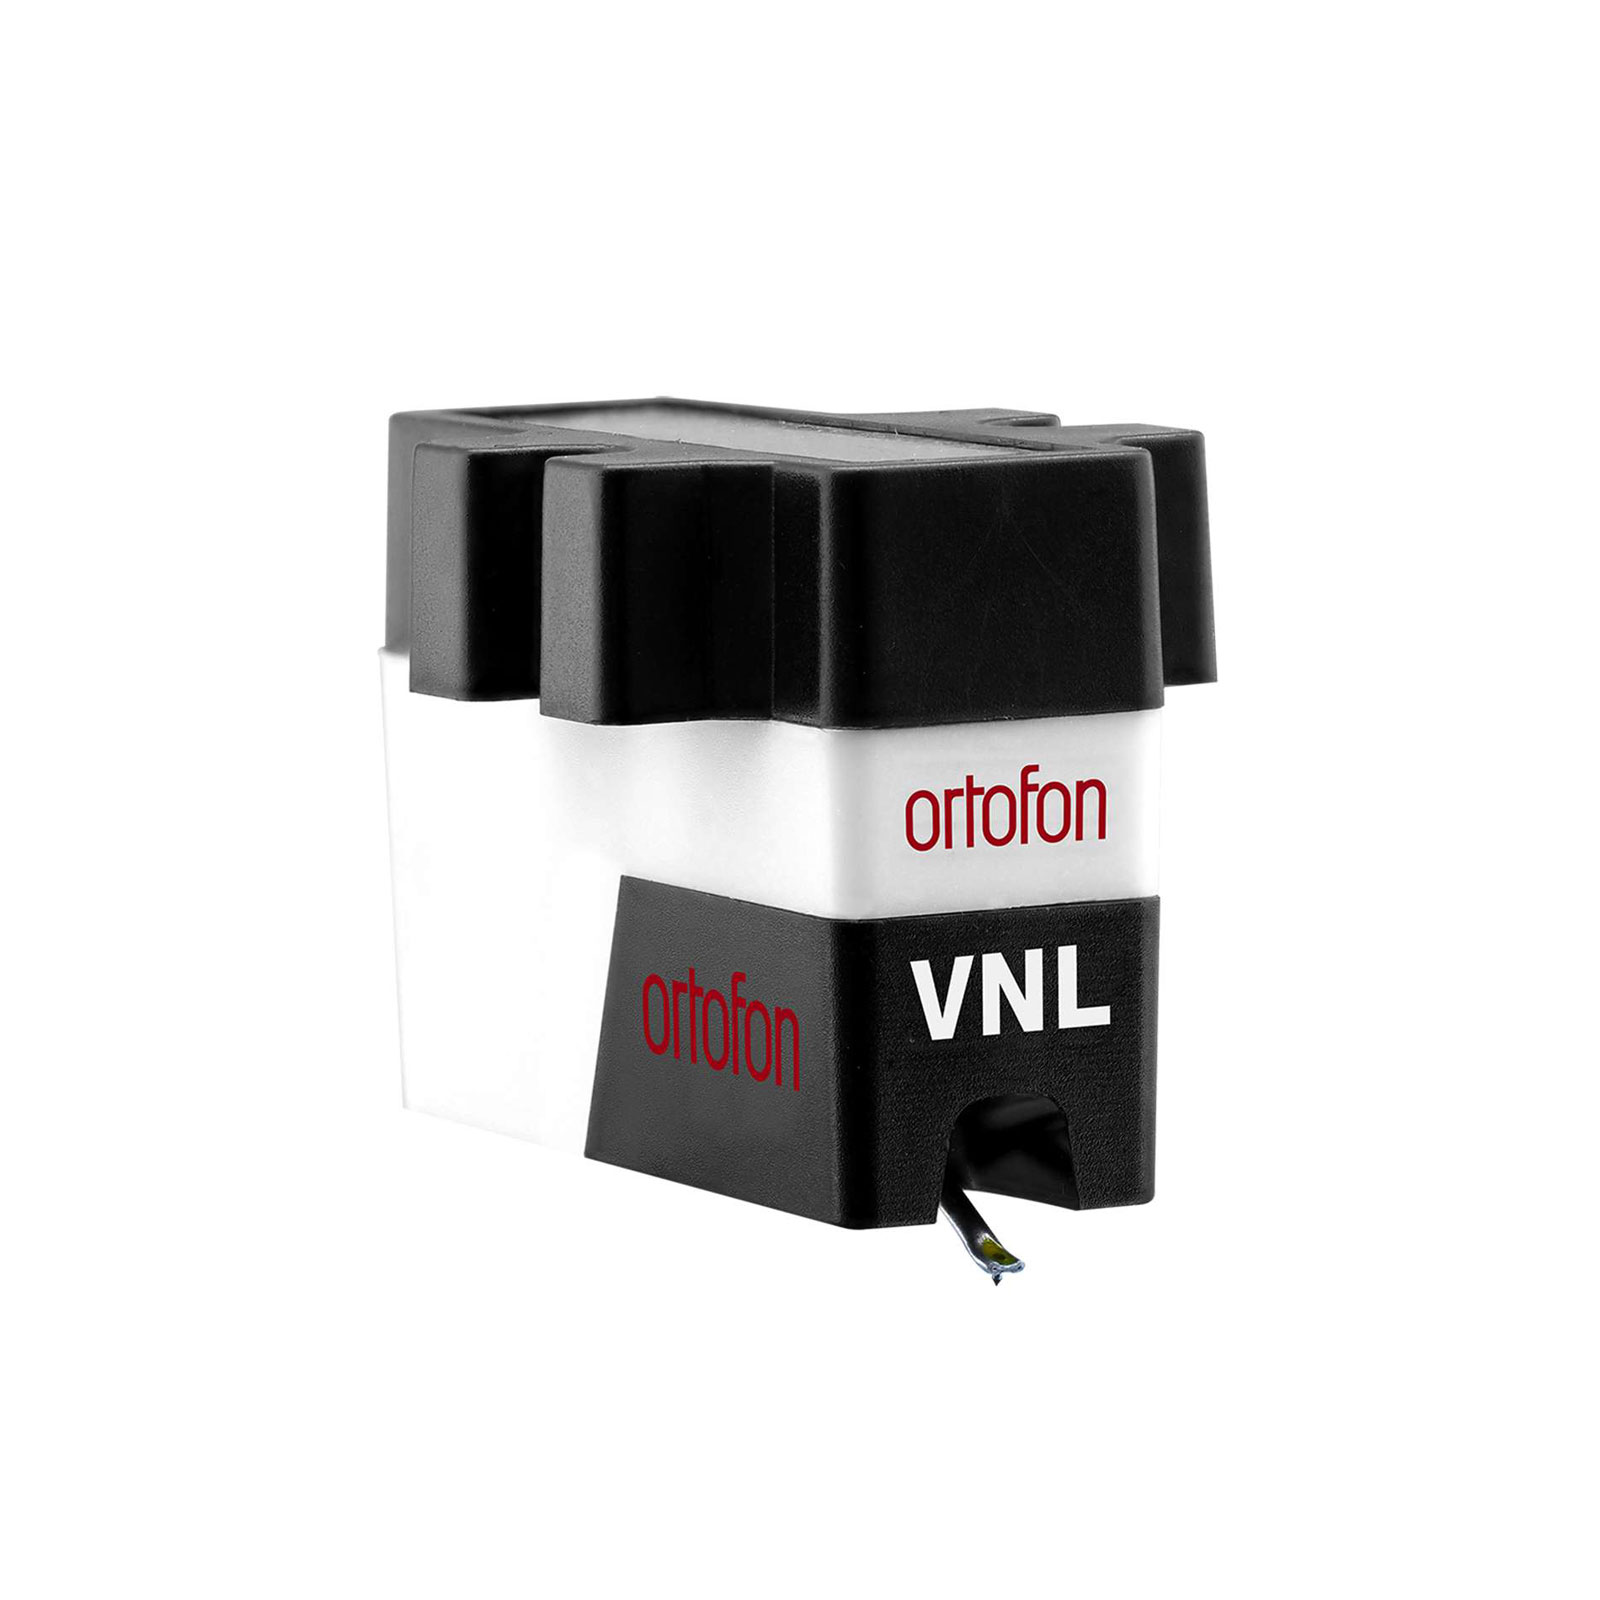 ORTOFON VNL - 3 STYLUS